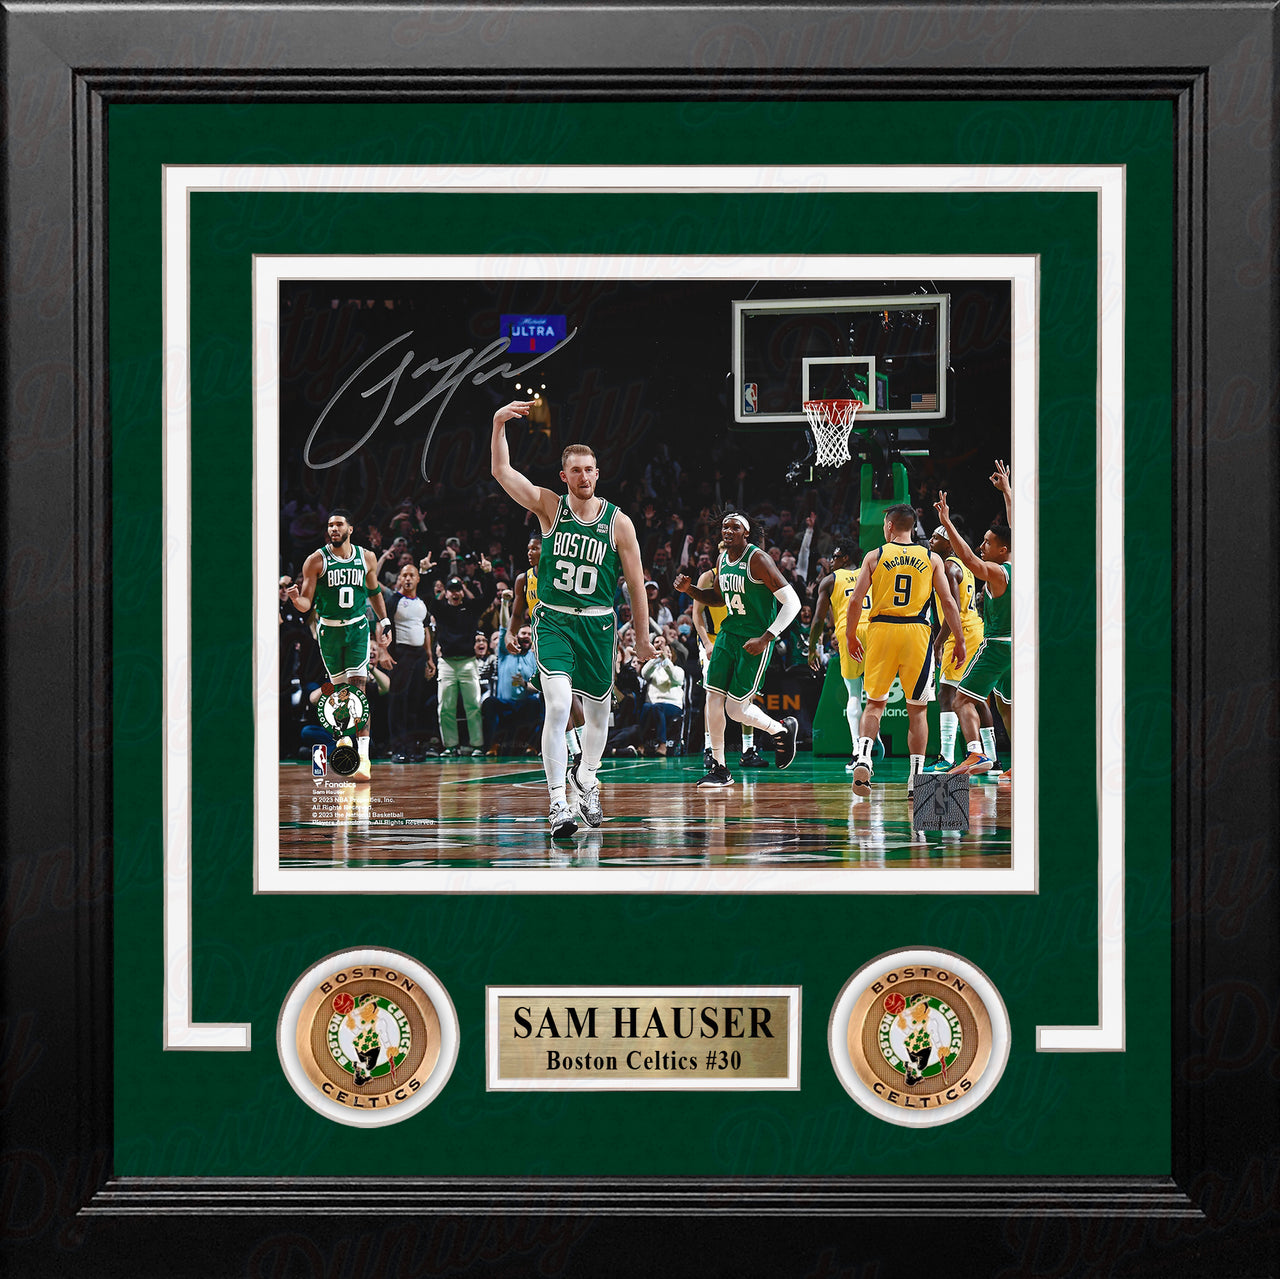 Sam Hauser Celebration Boston Celtics Autographed 8" x 10" Framed Basketball Photo - Dynasty Sports & Framing 